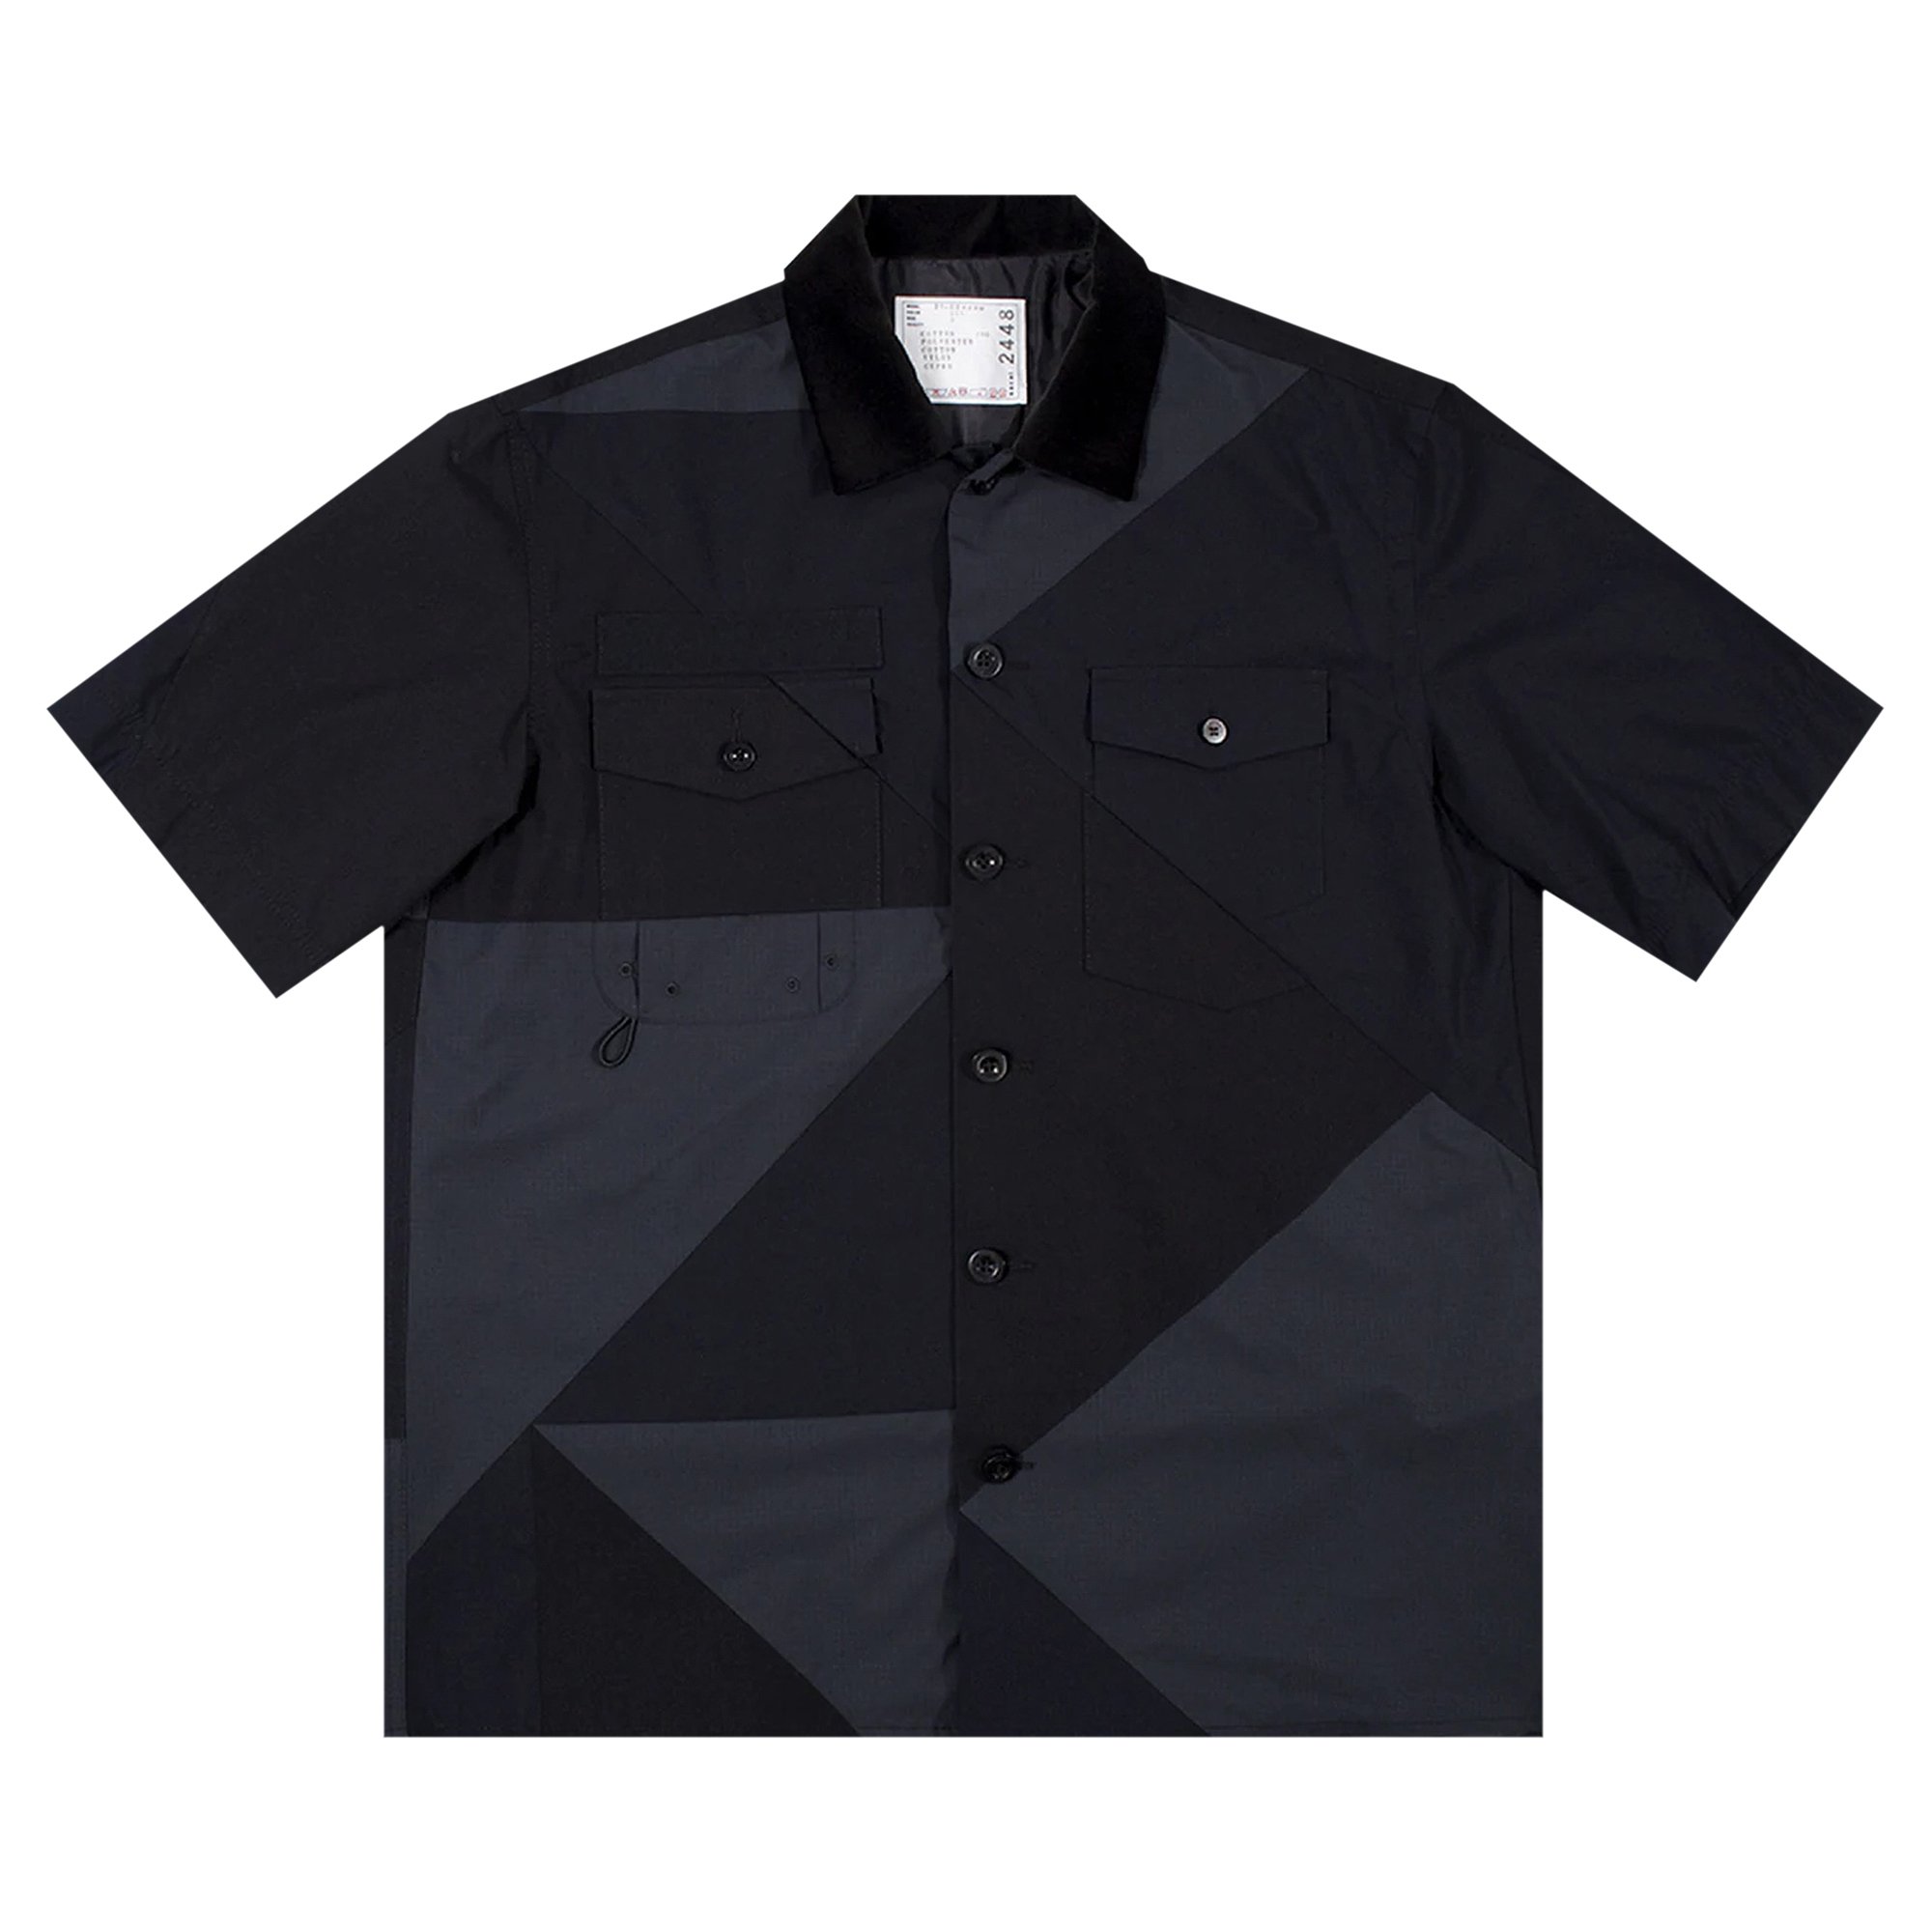 Buy Sacai x Hank Willis Thomas Solid Mix Shirt 'Black' - 21 02448M